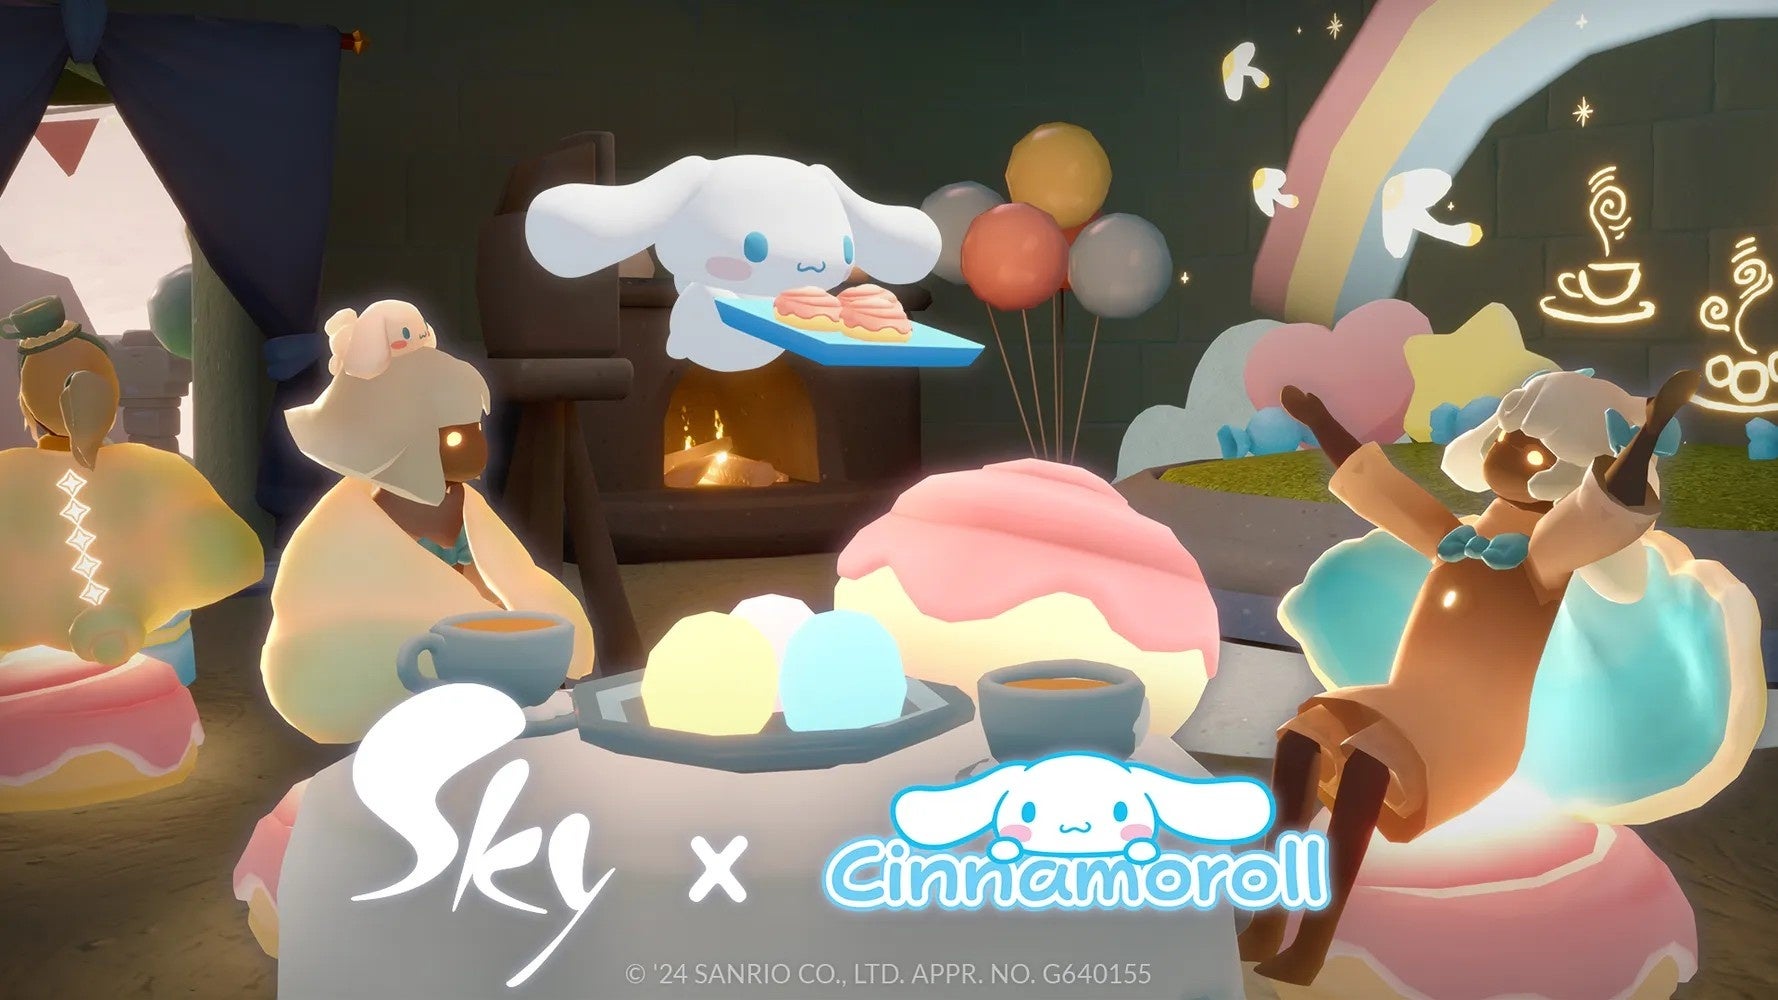 Skyがサンリオキャラクターと初コラボレーション！花鳥郷に『Sky × Cinnamorollもくもくカフェ』が4月27日（土）16:00から期間限定で登場。